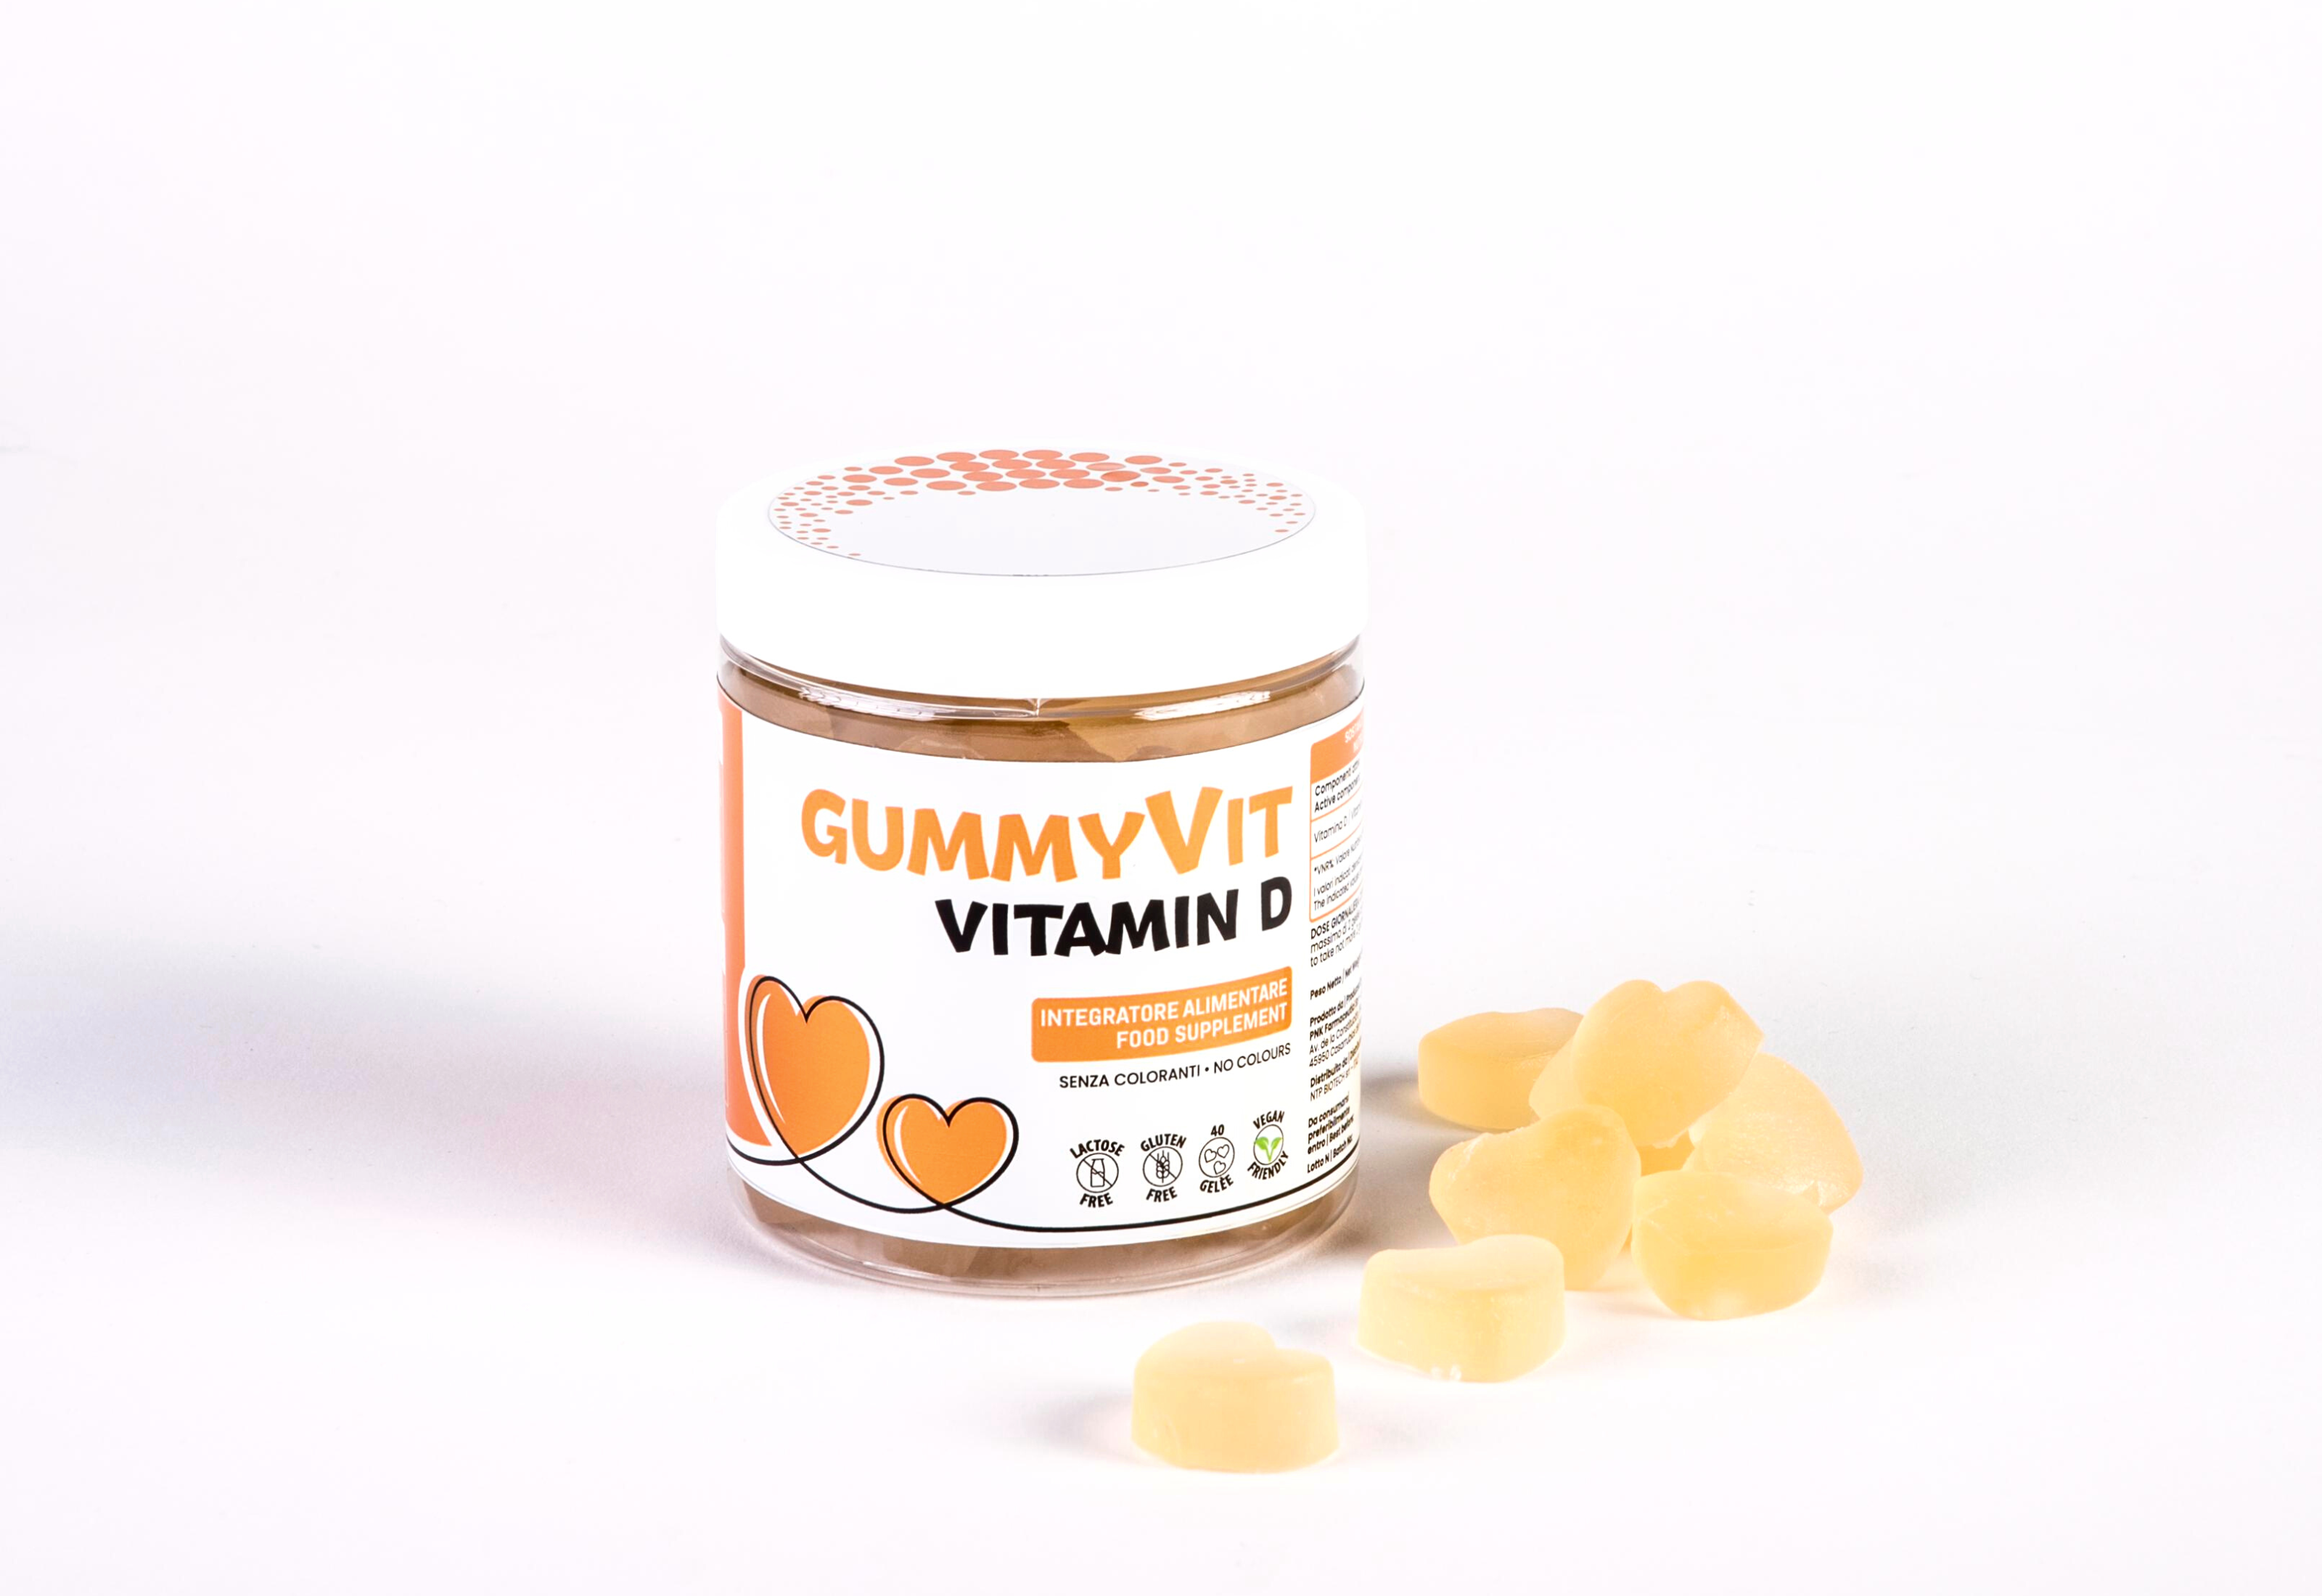 Gummyvit Vitamina D - Integratore in gommose di vitamina D